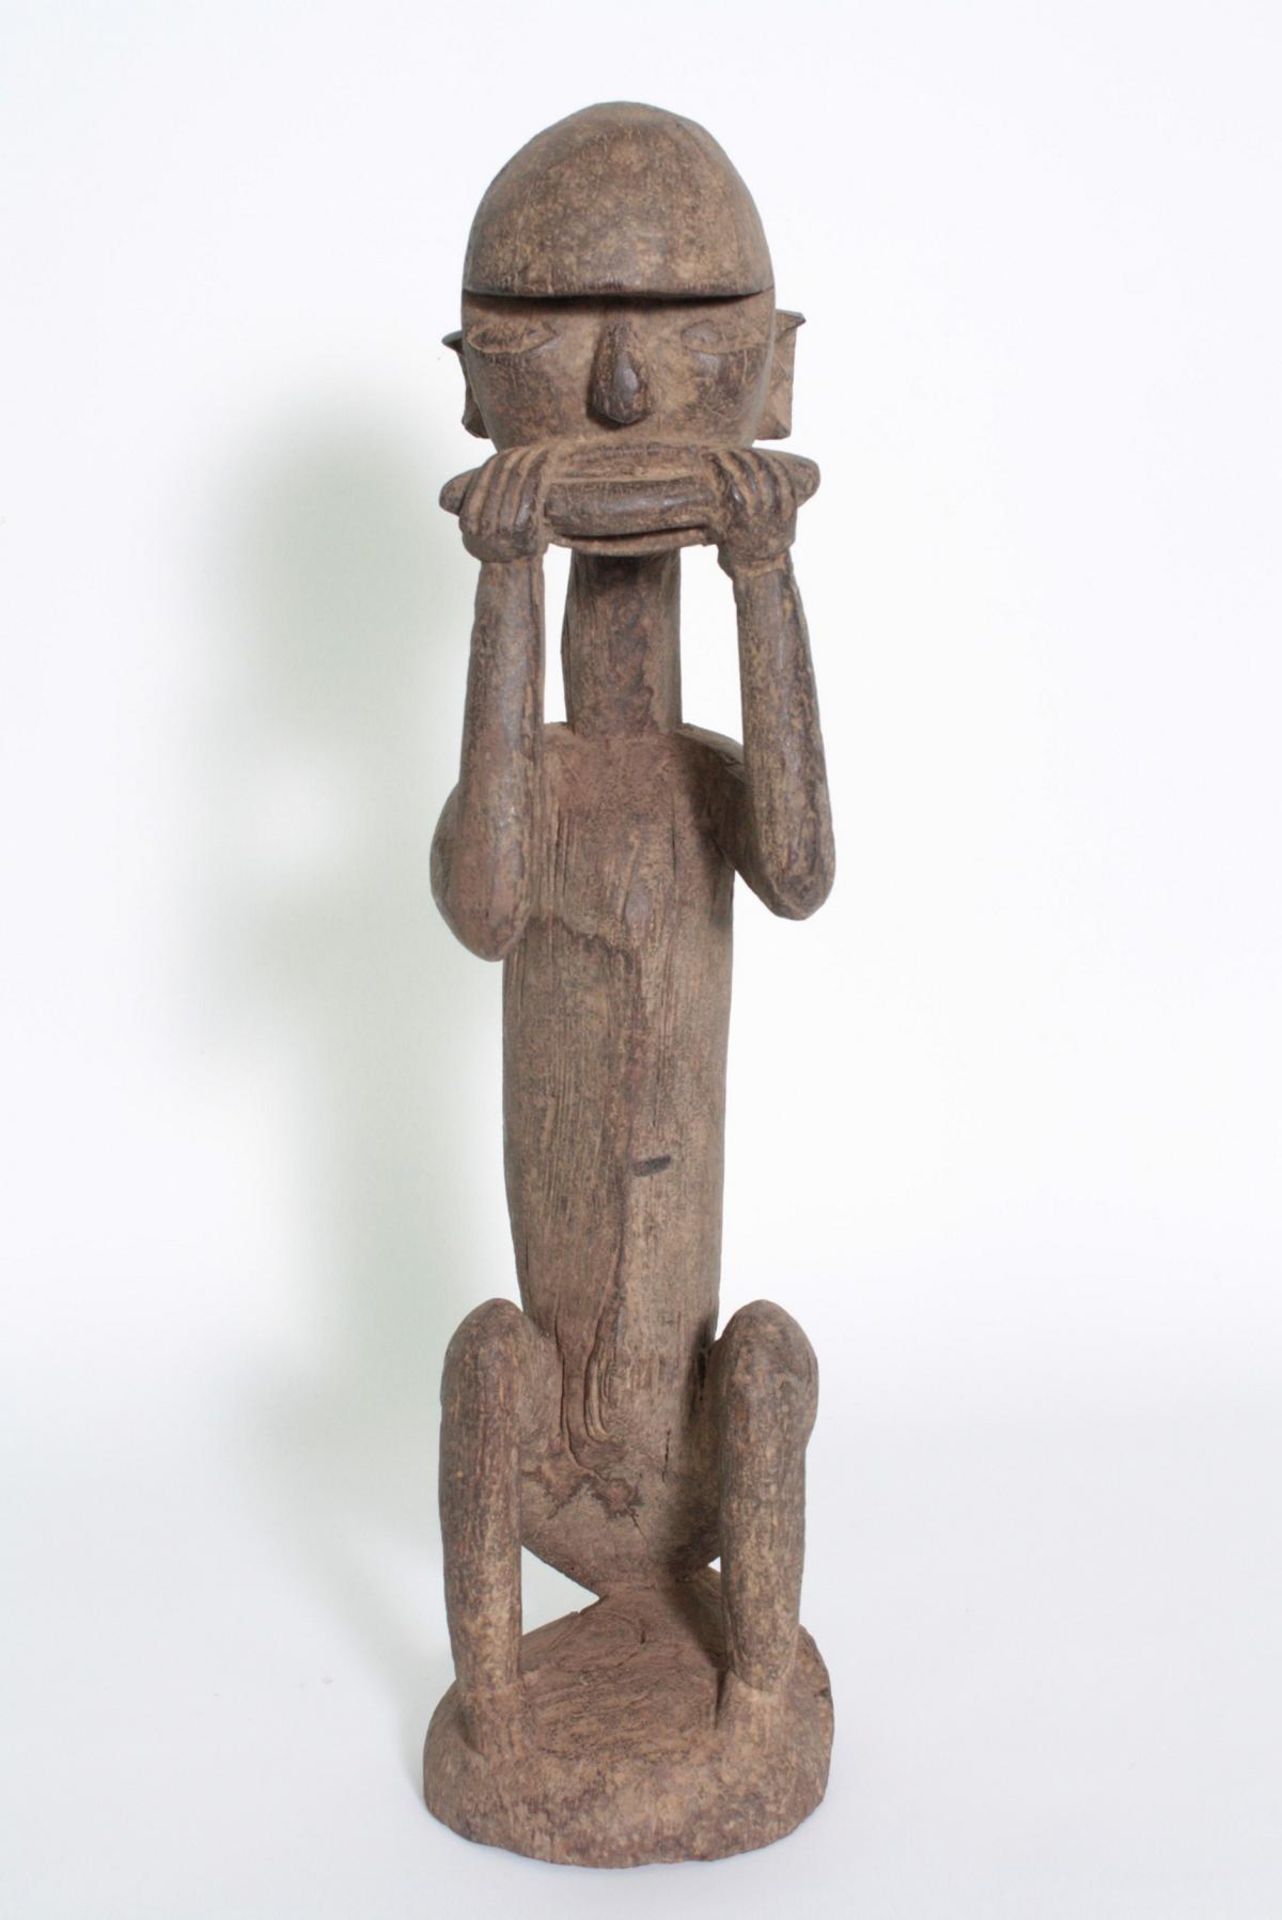 Hockende zoomorphe Figur, wohl Lobi, Burkina Faso, 1. Hälfte 20. Jh.